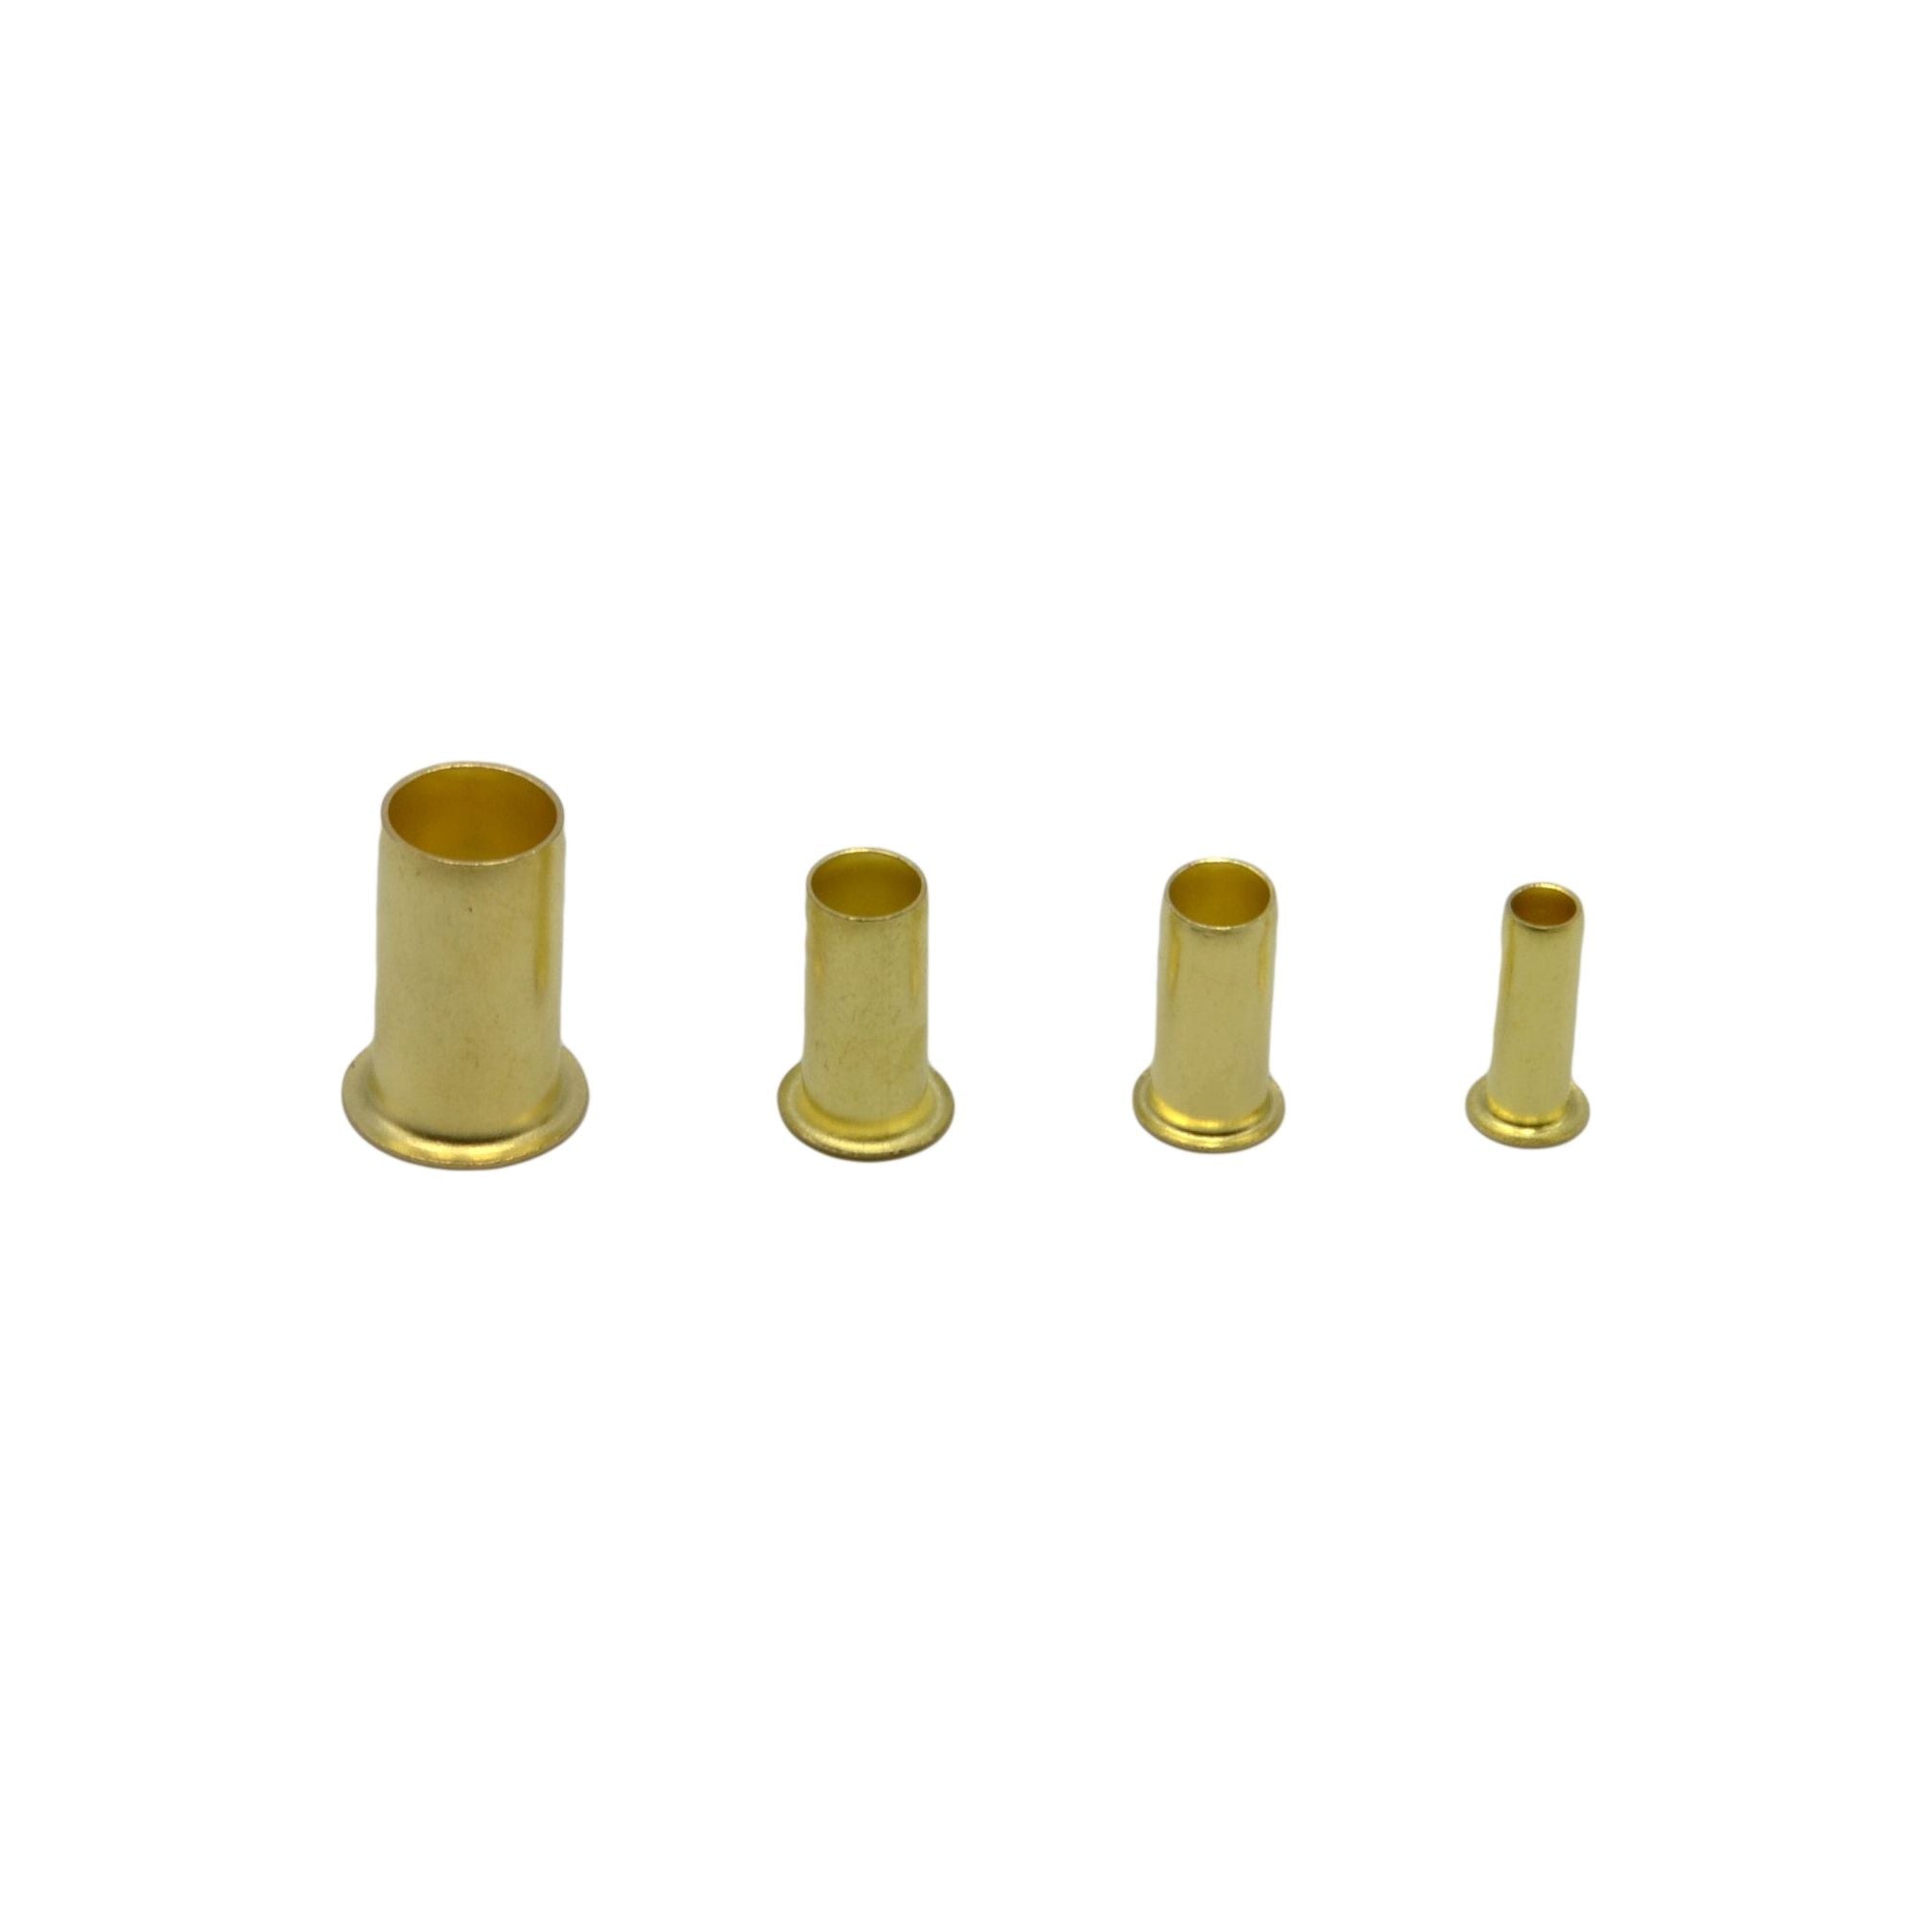 160 Pc Brass Compression Insert & Sleeve Grab Kit Assortment